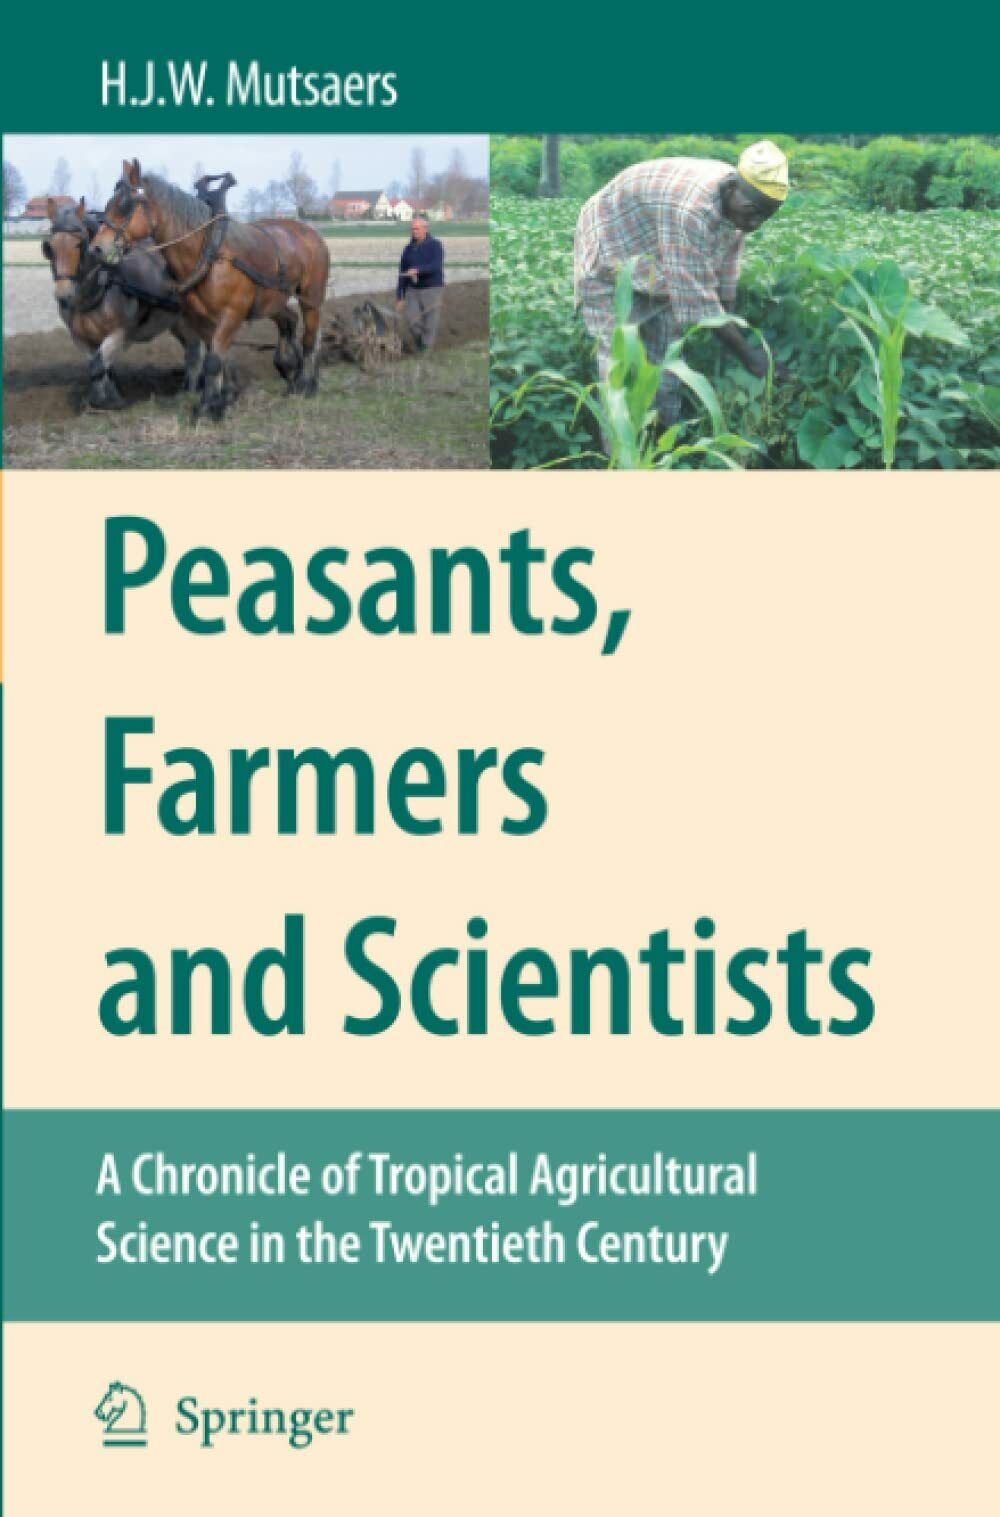 Peasants, Farmers and Scientists - H. J. W. Mutsaers - Springer, 2010